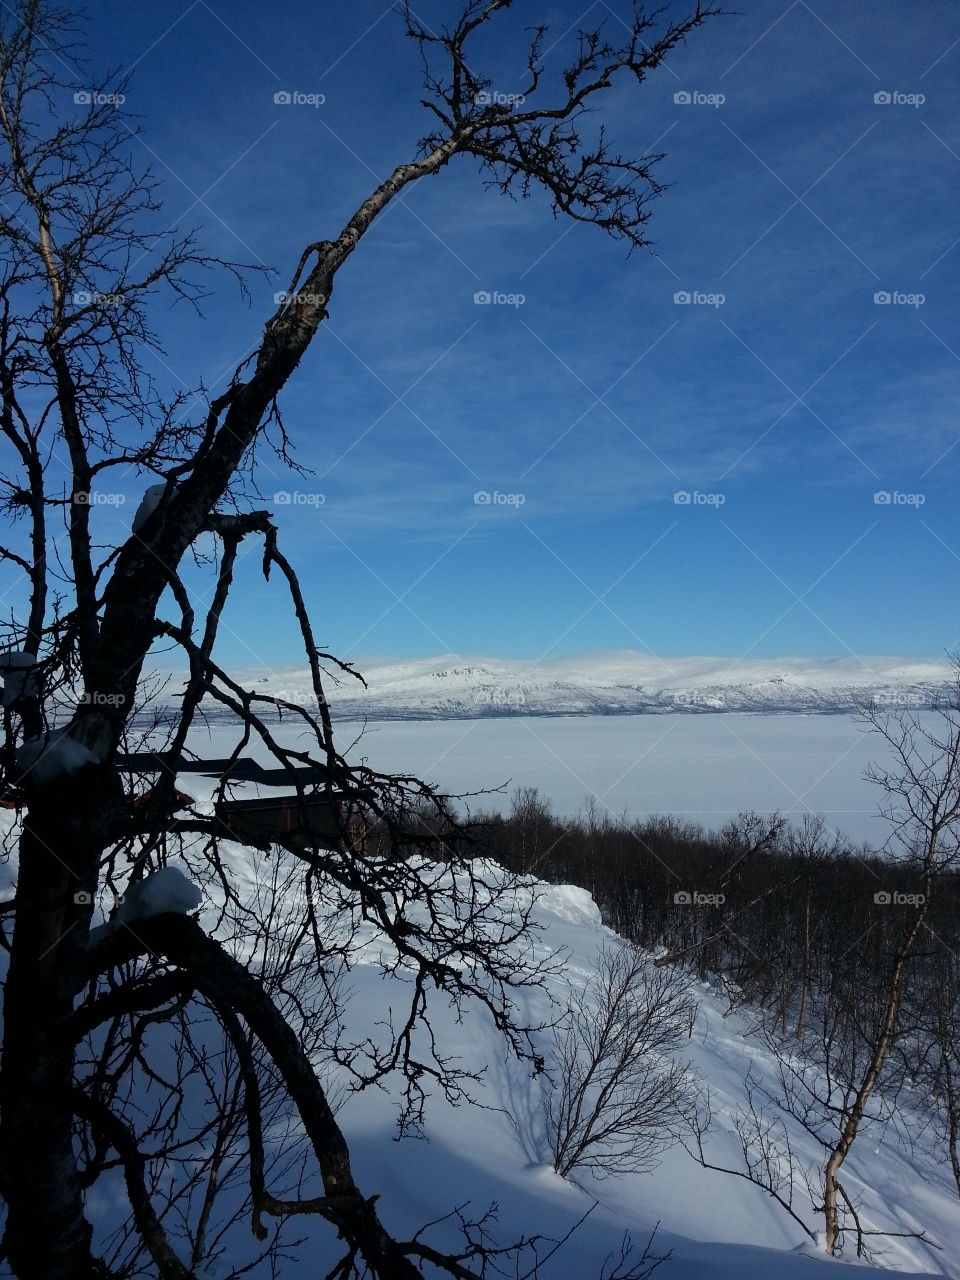 Winter wonderland. Skiing holiday in Lappland